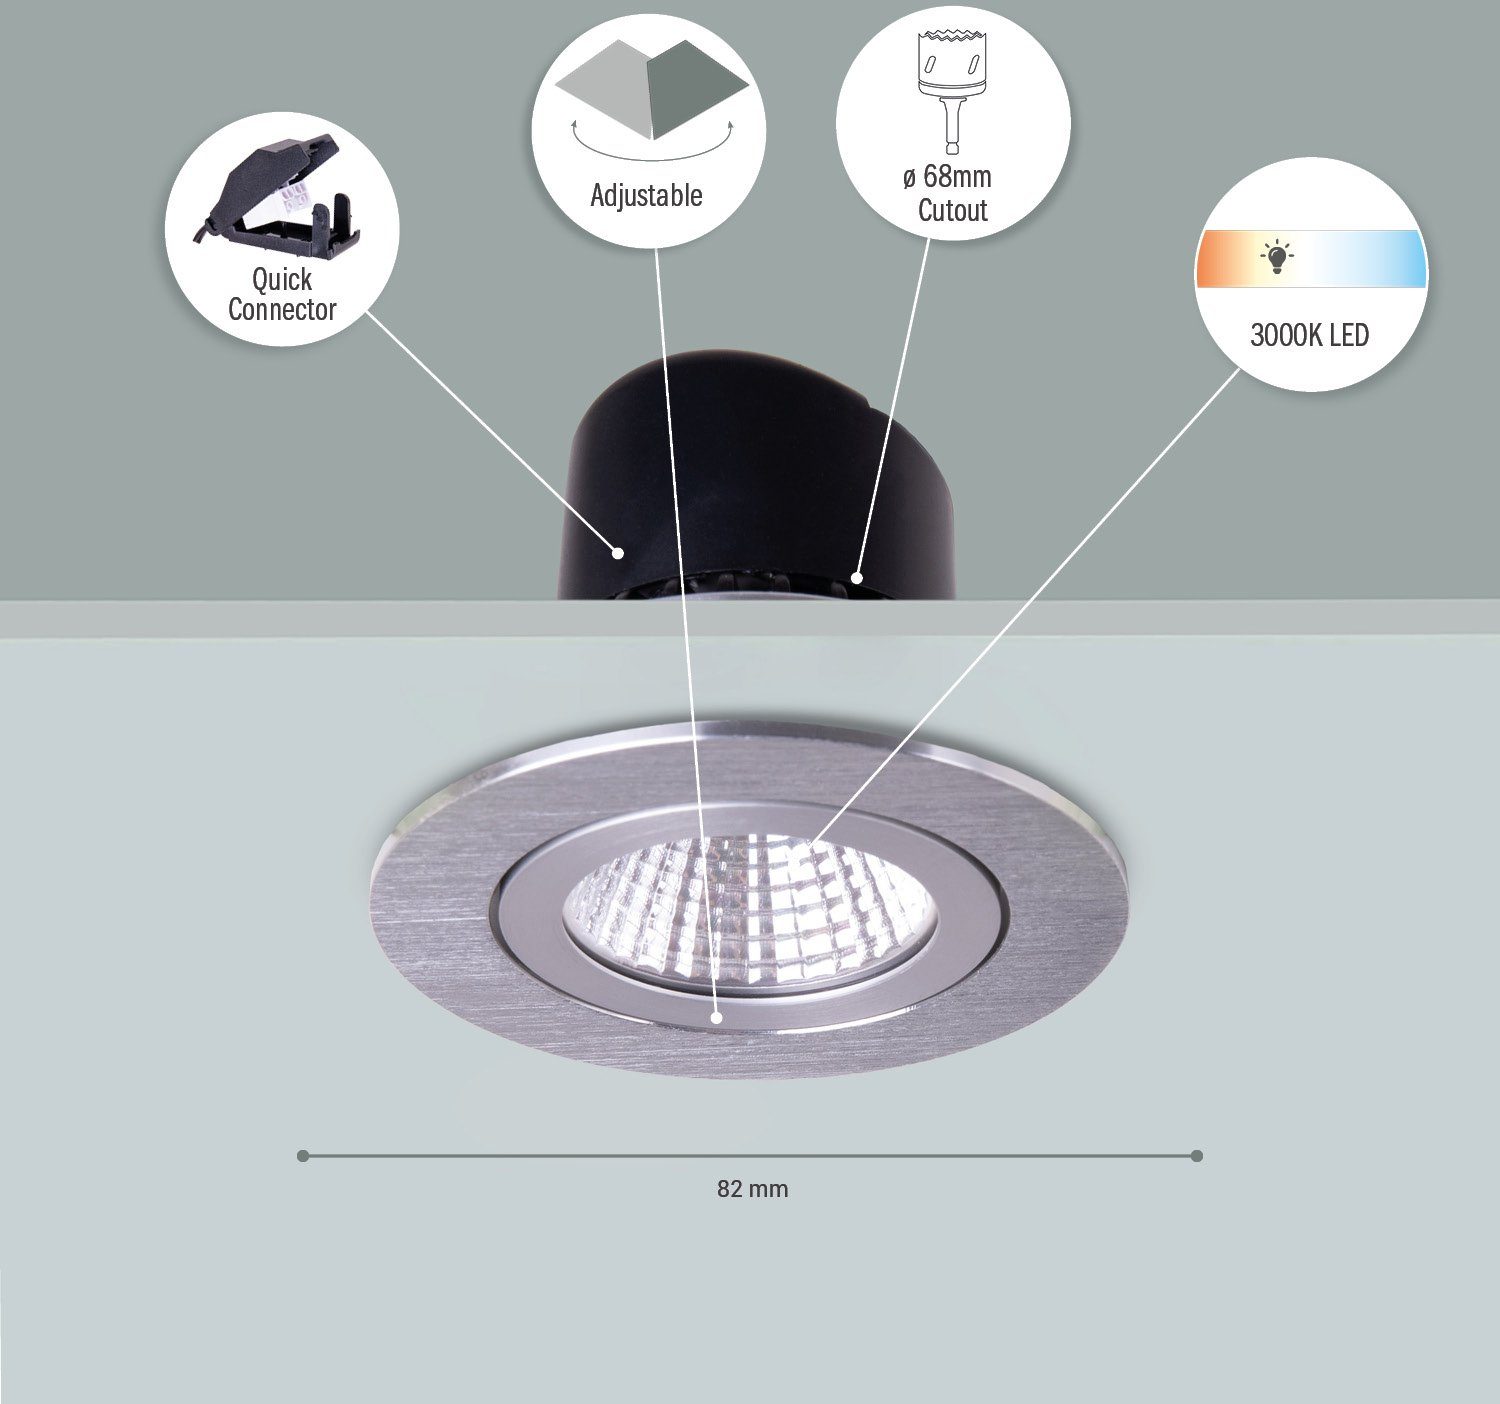 Paco LED LED Einbauleuchte Home wechselbar, Warmweiß, Flach Einbaustrahler dimmbar LED Spotlight Rita, Strahler Schwenkbar